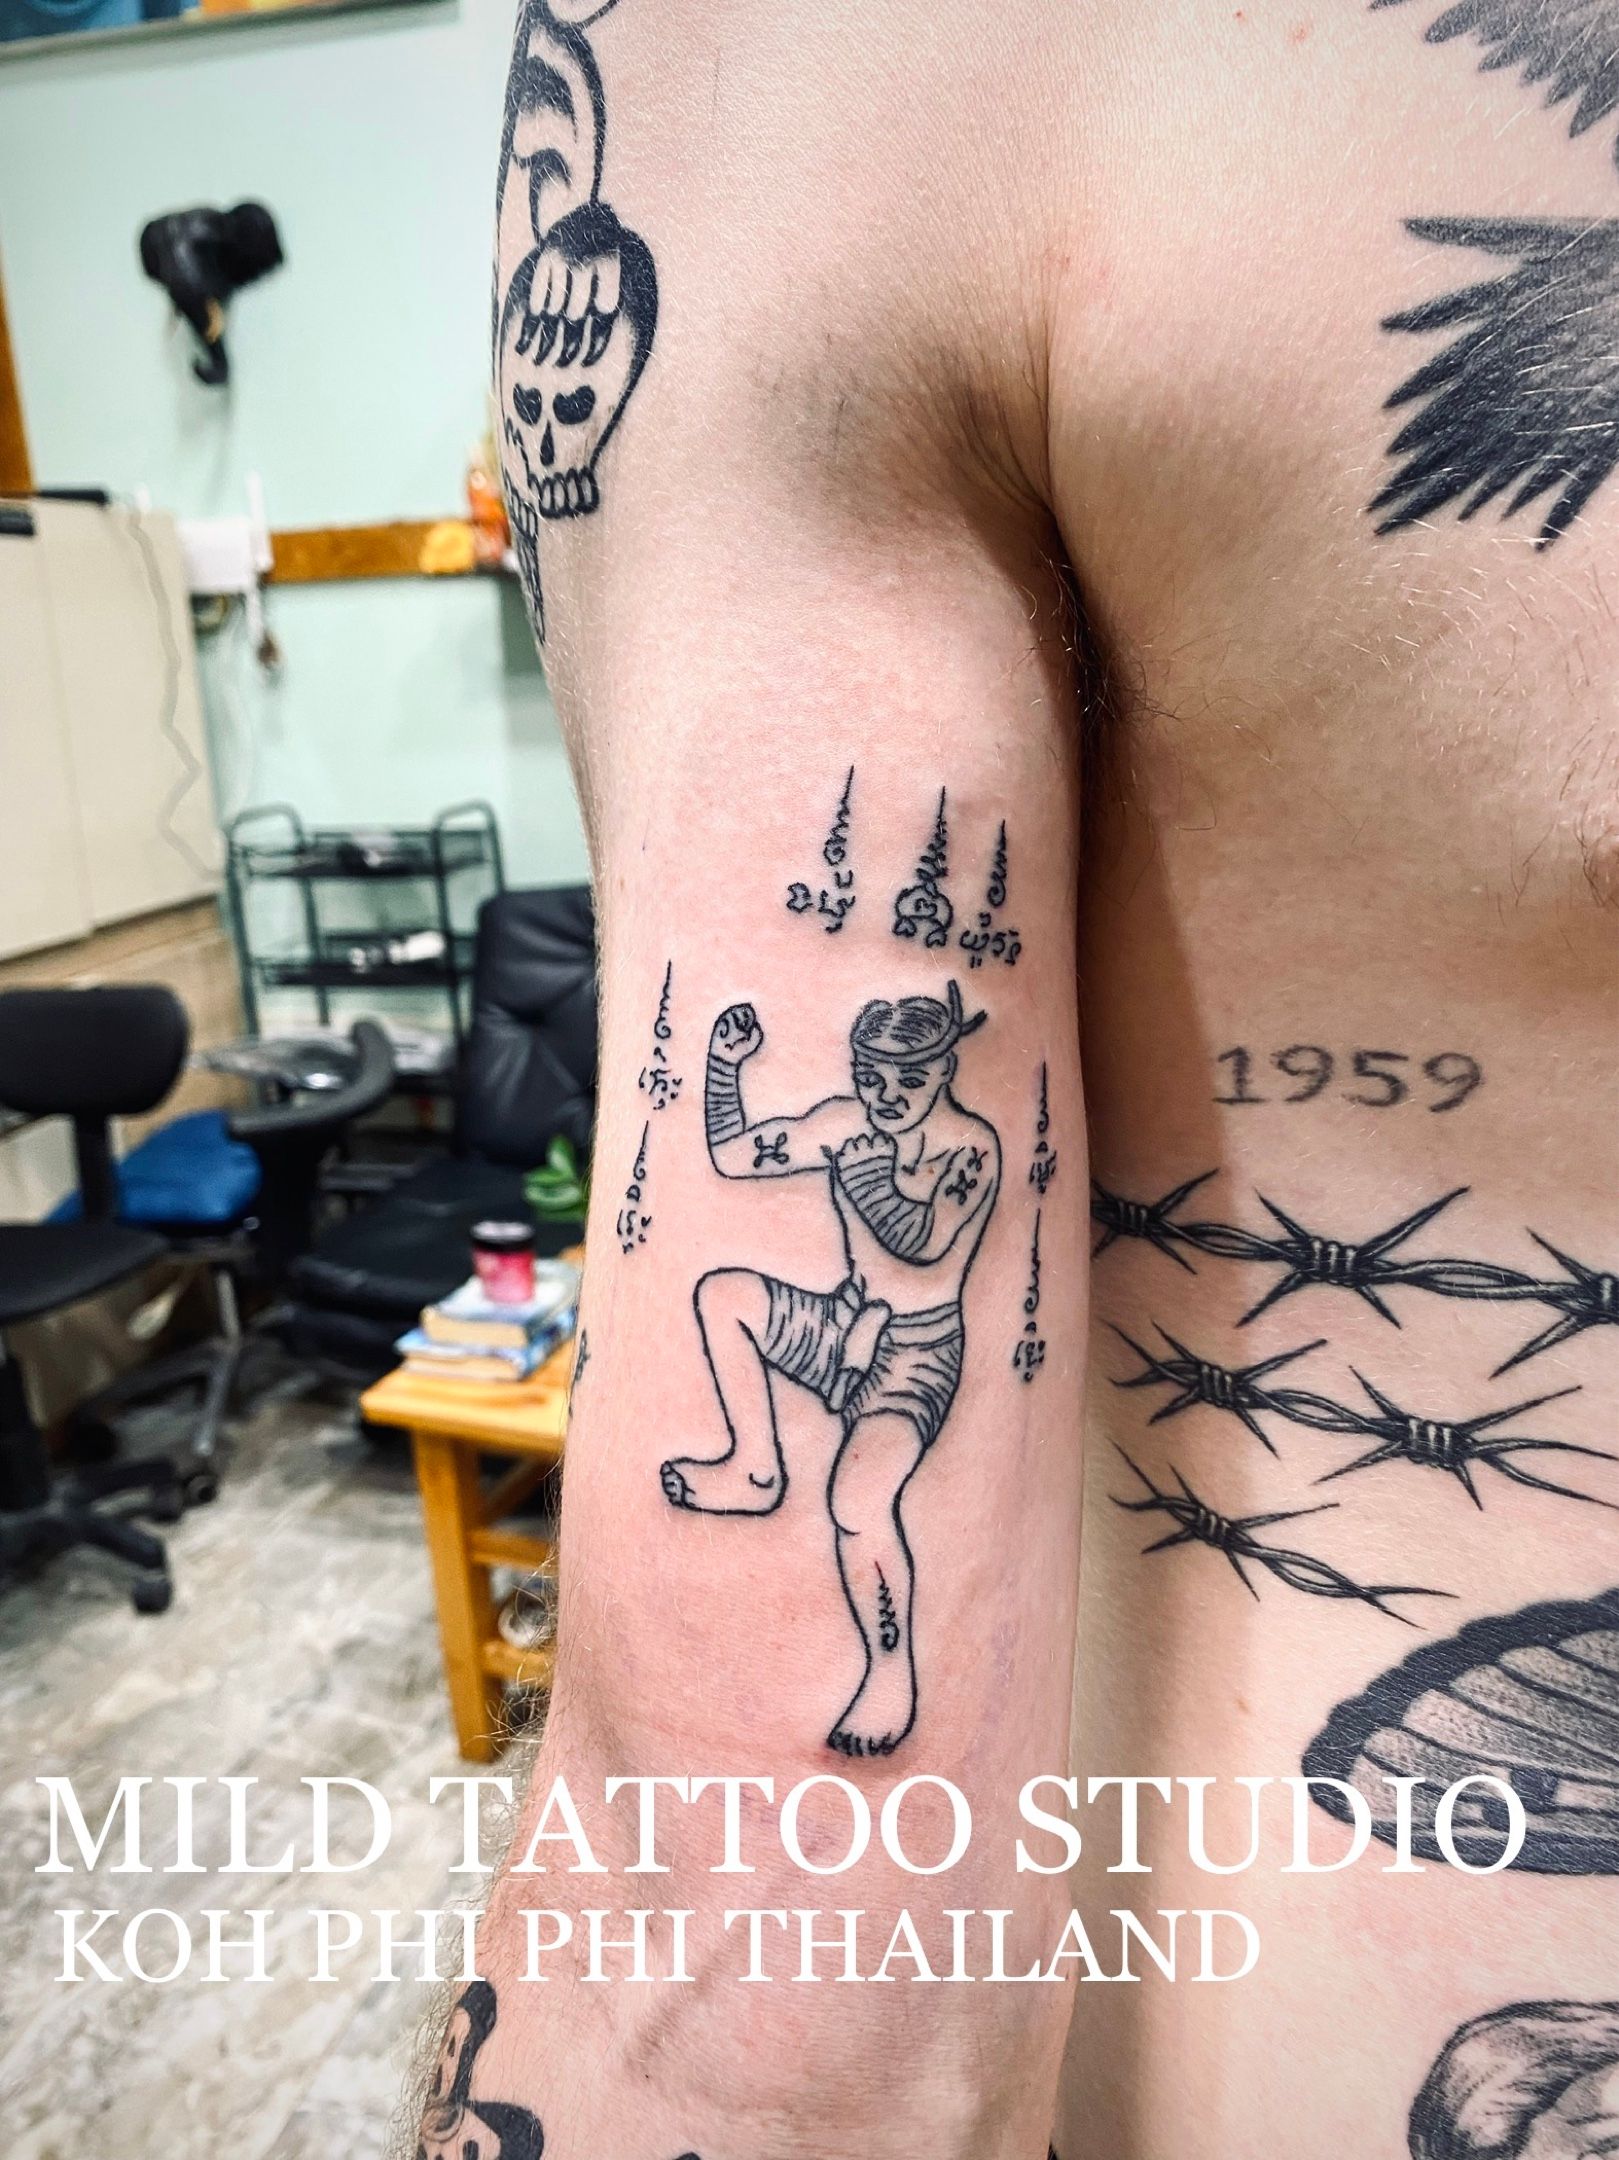 Tattoo uploaded by @MILD TATTOO STUDIO KOH PHI PHI THAILAND • #meditation  #buddhatattoo #tattooart #tattooartist #bambootattoothailand #traditional  #tattooshop #at #mildtattoostudio #mildtattoophiphi #tattoophiphi  #phiphiisland #thailand #tattoodo ...